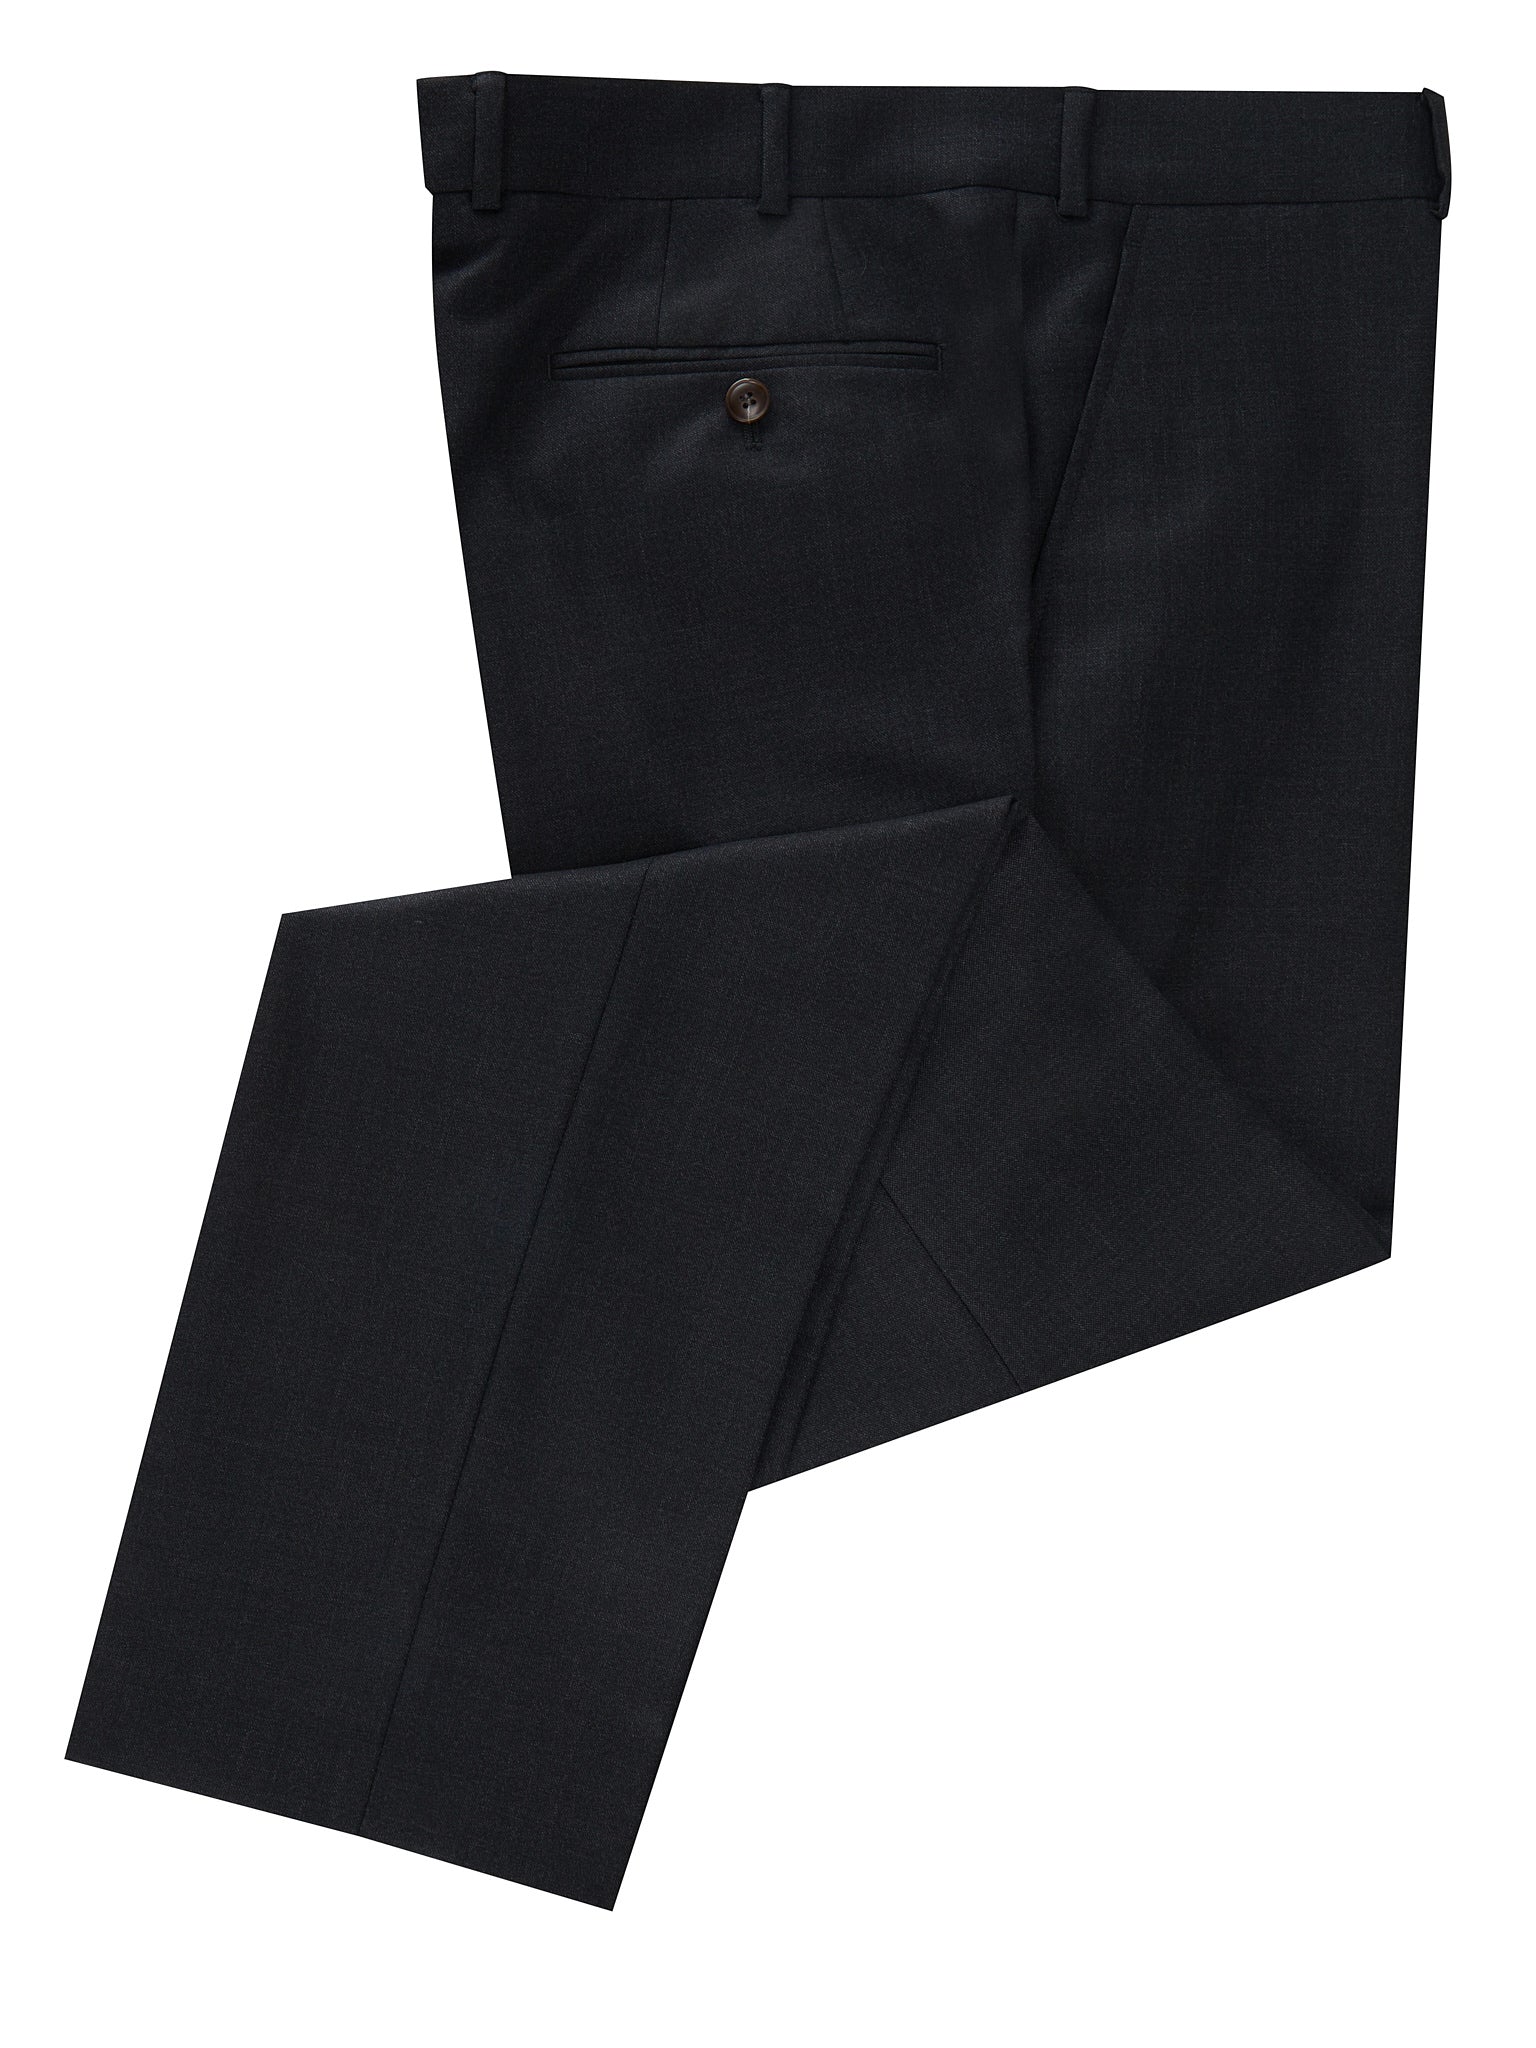 Douglas Valdino Charcoal Mix & Match Suit Trousers Long Length